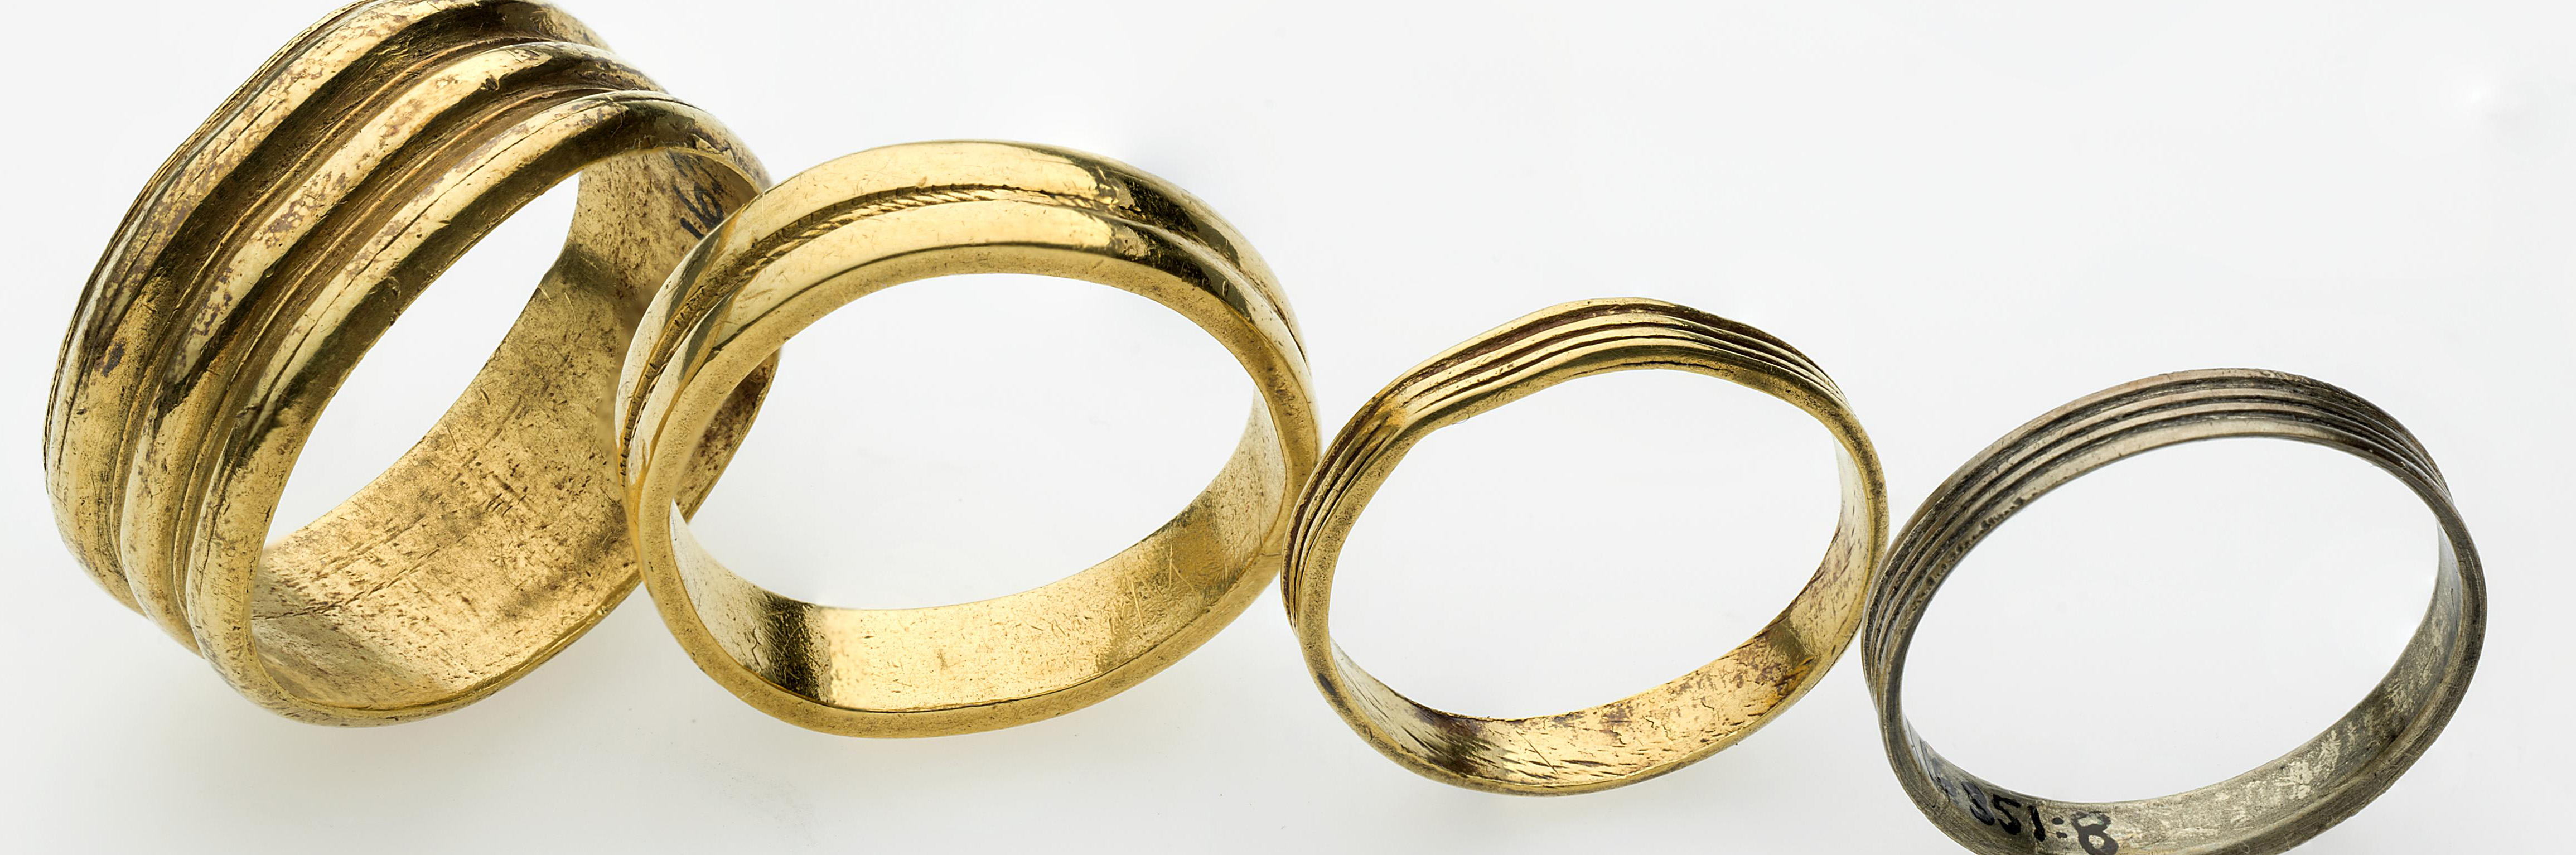 Gold rings. Photo Åge Hojem NTNU Vitenskapsmuseet